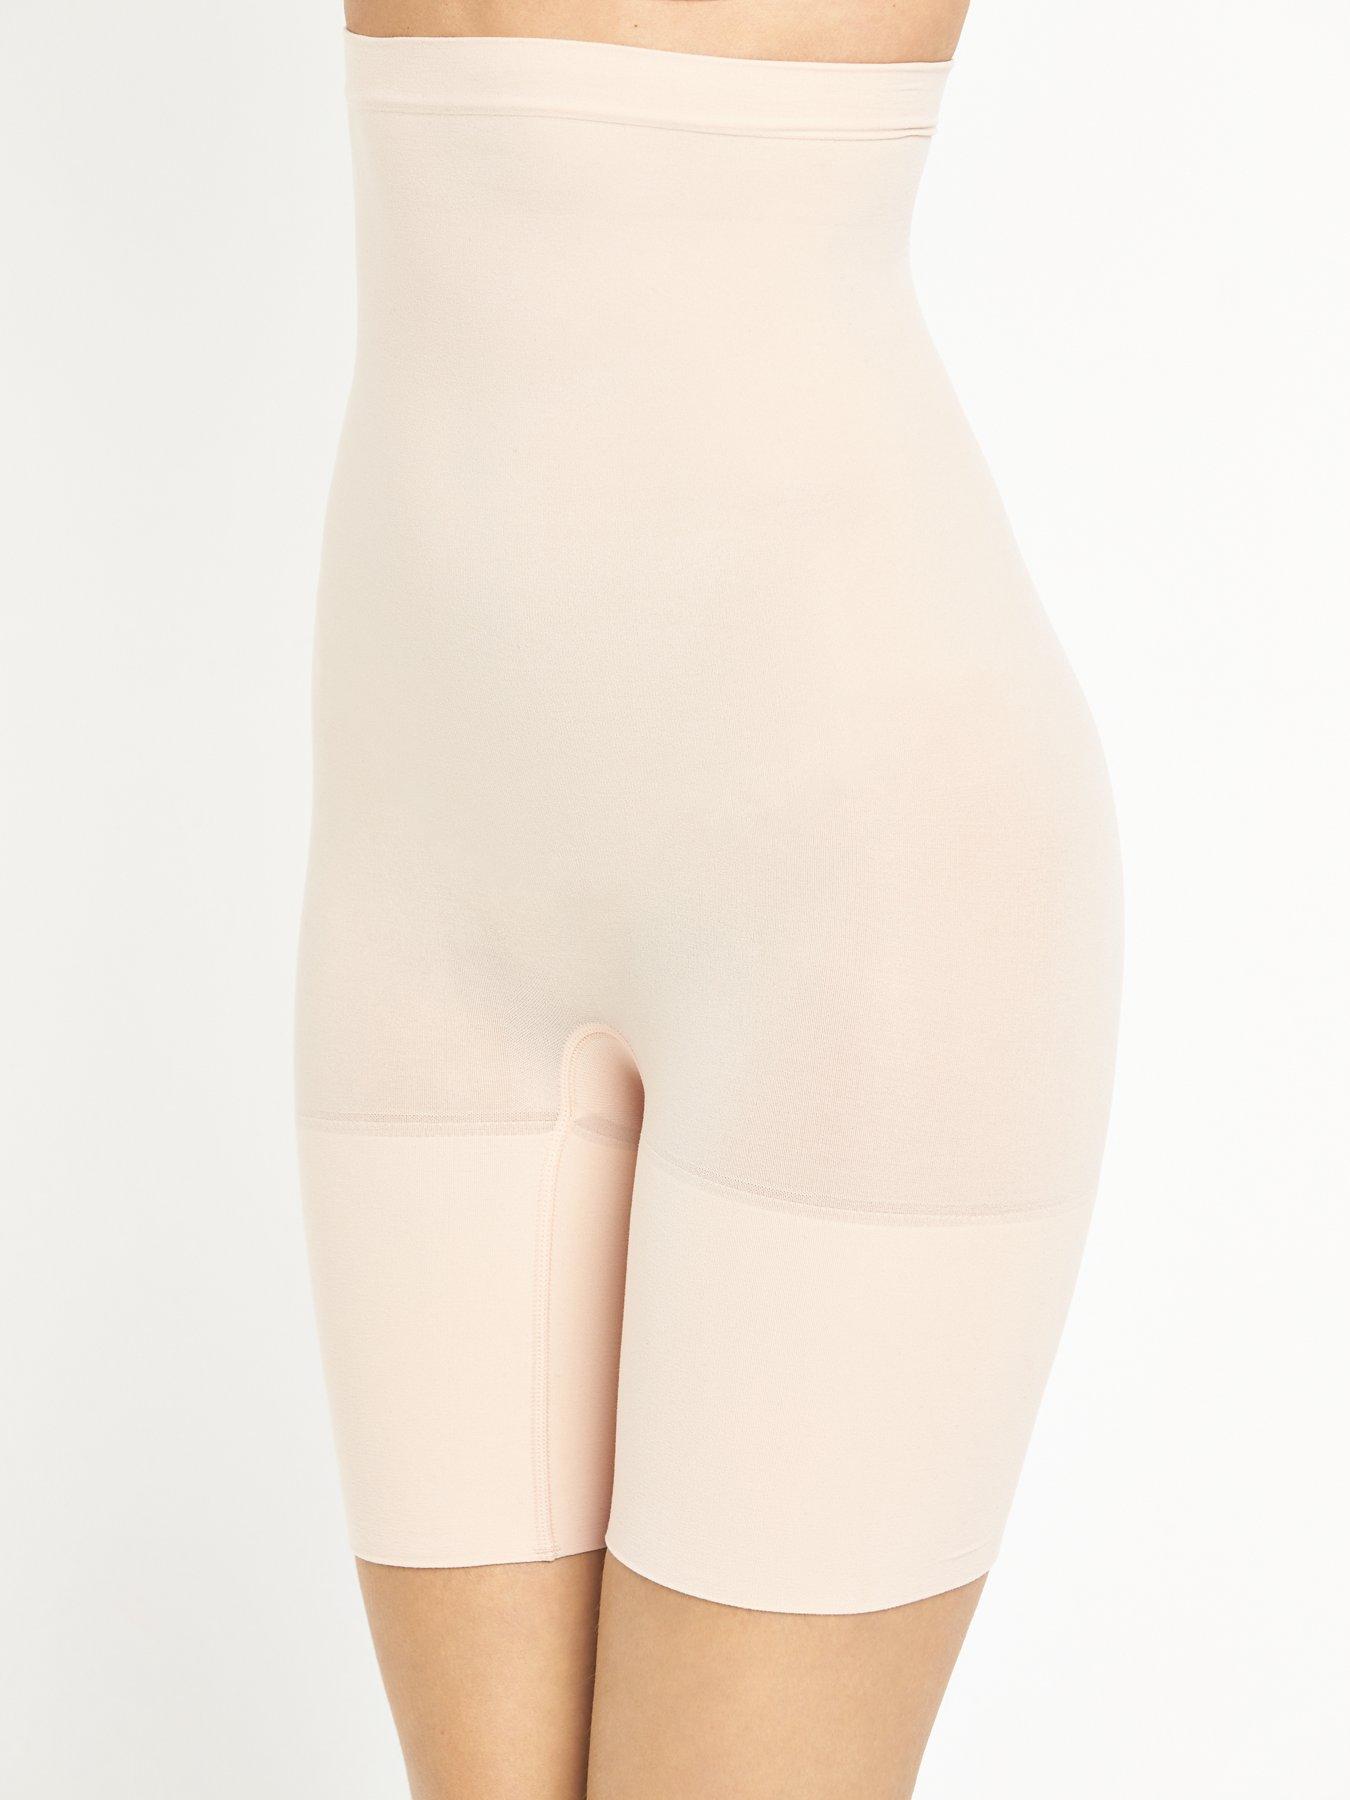 Buy Spanx Womens Power Series Higher Power Panties Size Medium in Nude 51%  Nylon, 49% Spandex/Elastane at